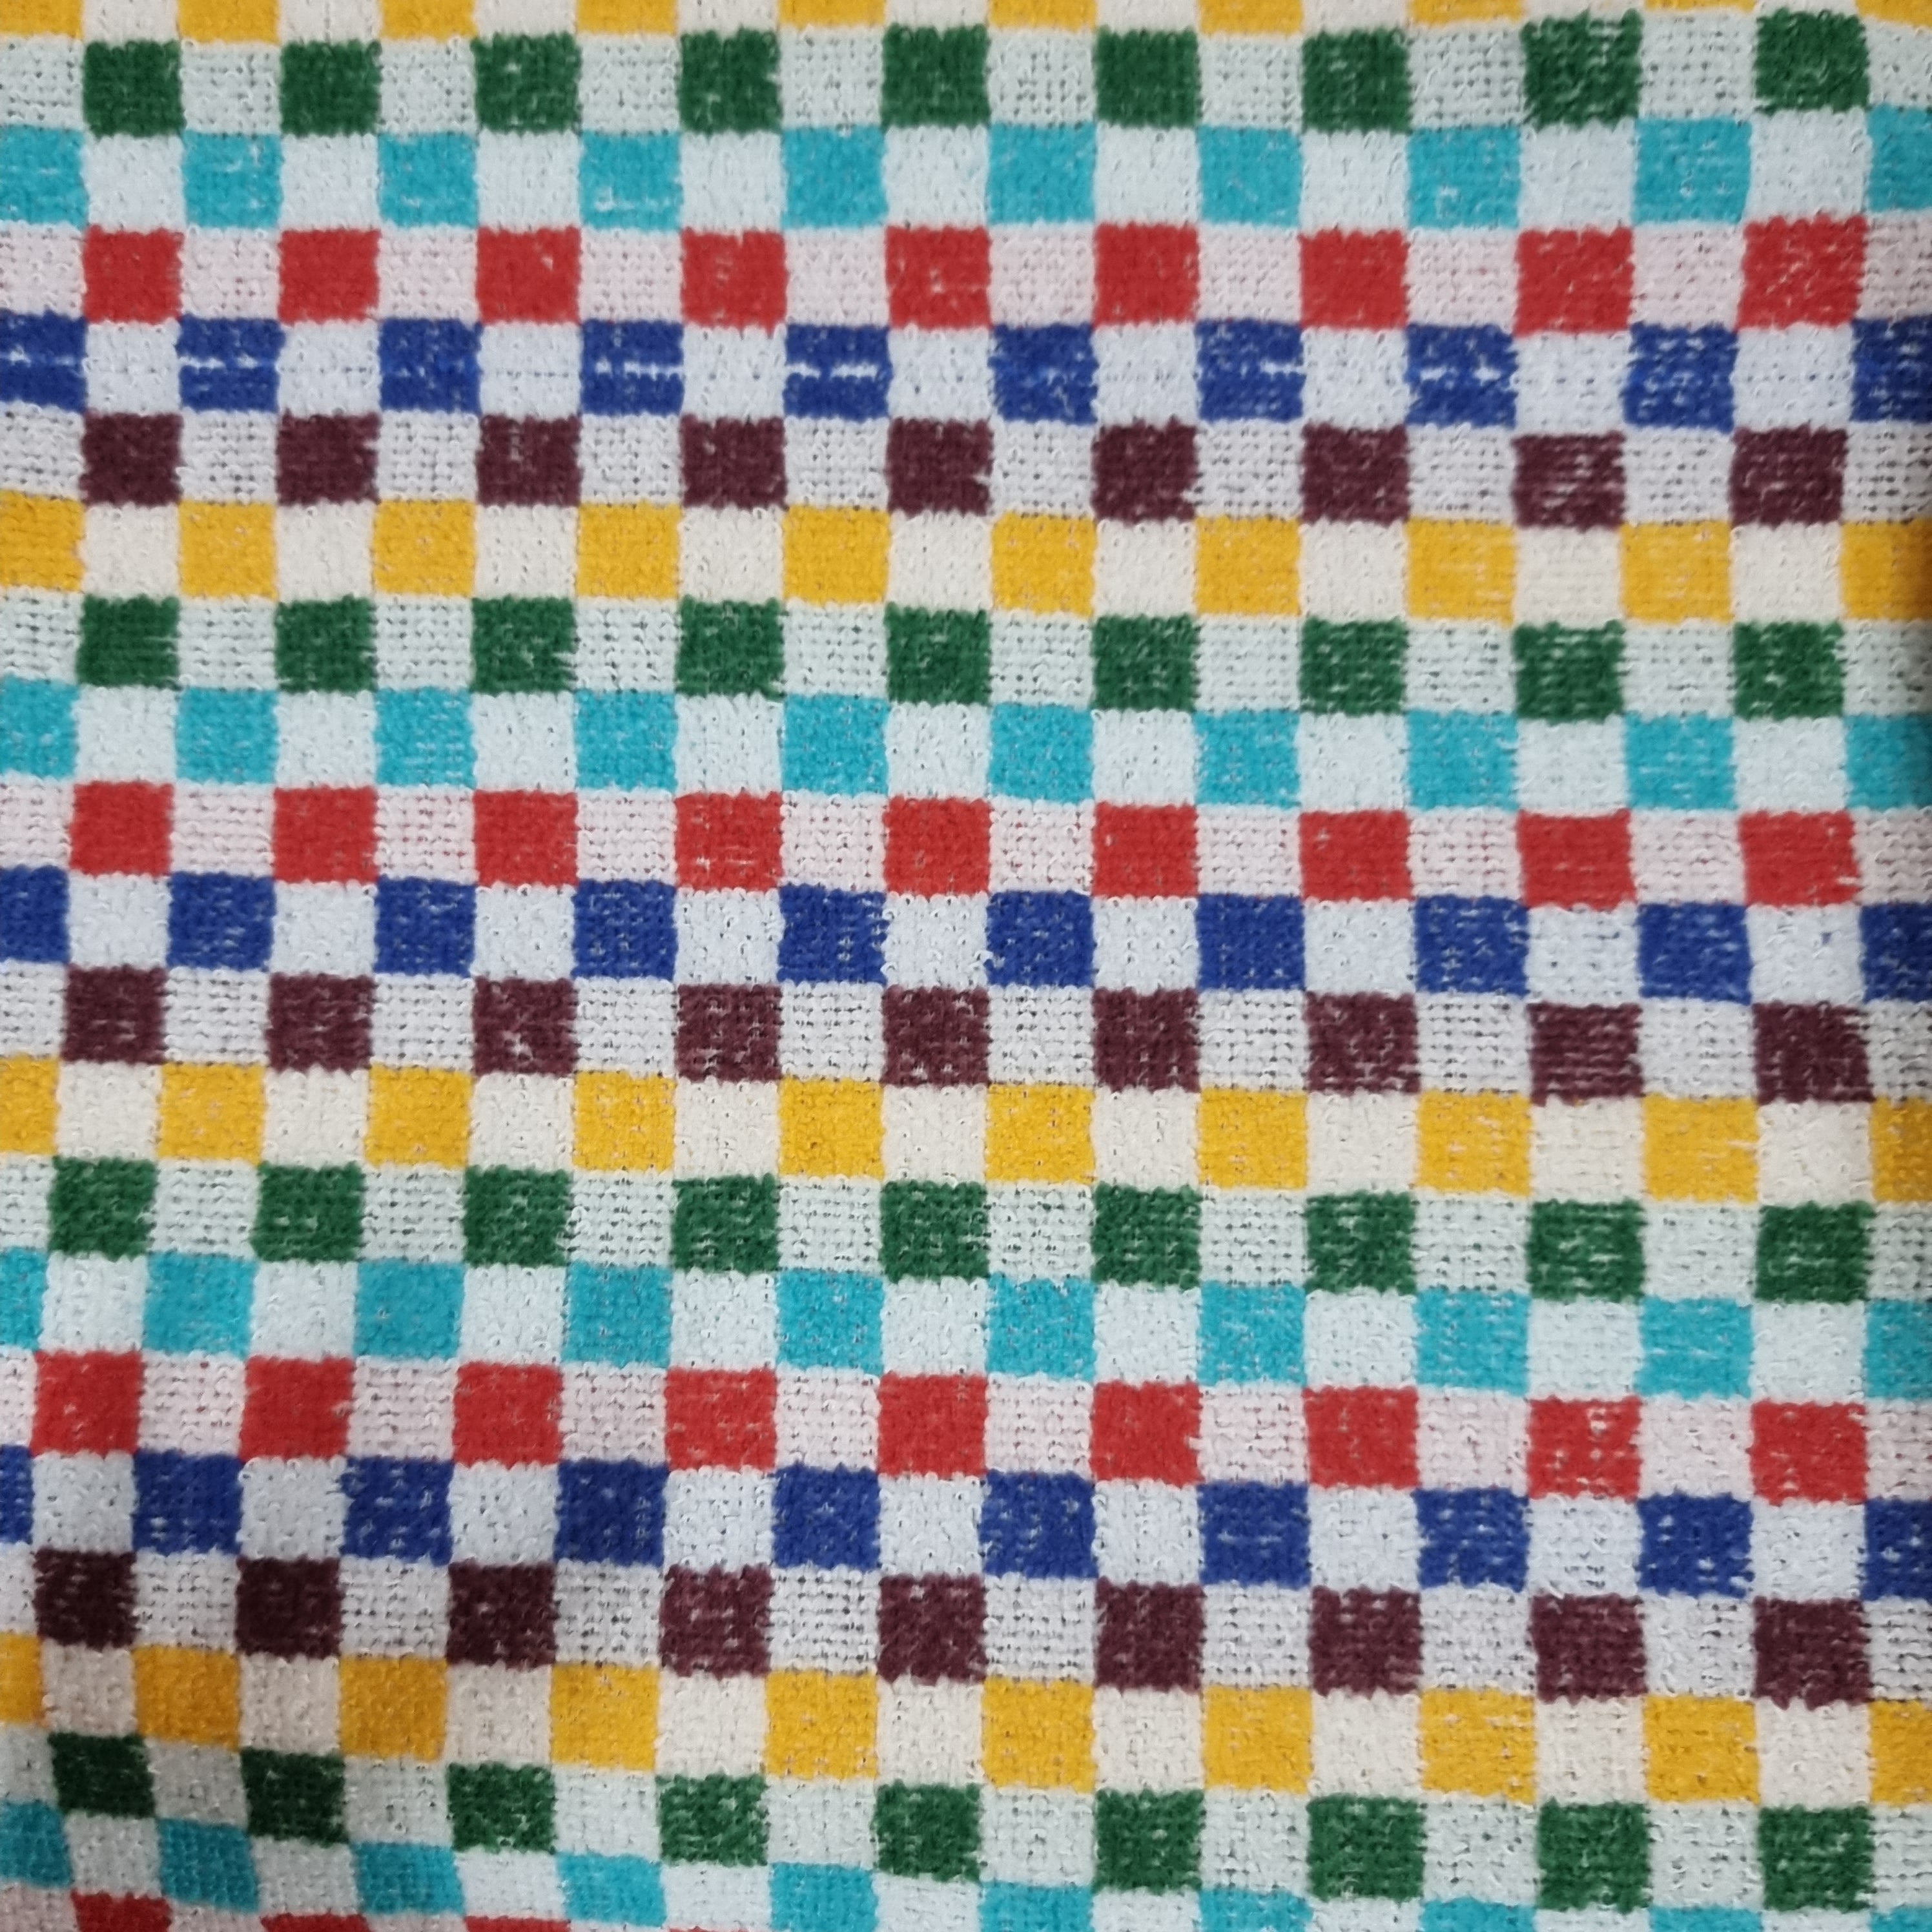 Dice Pattern Towels